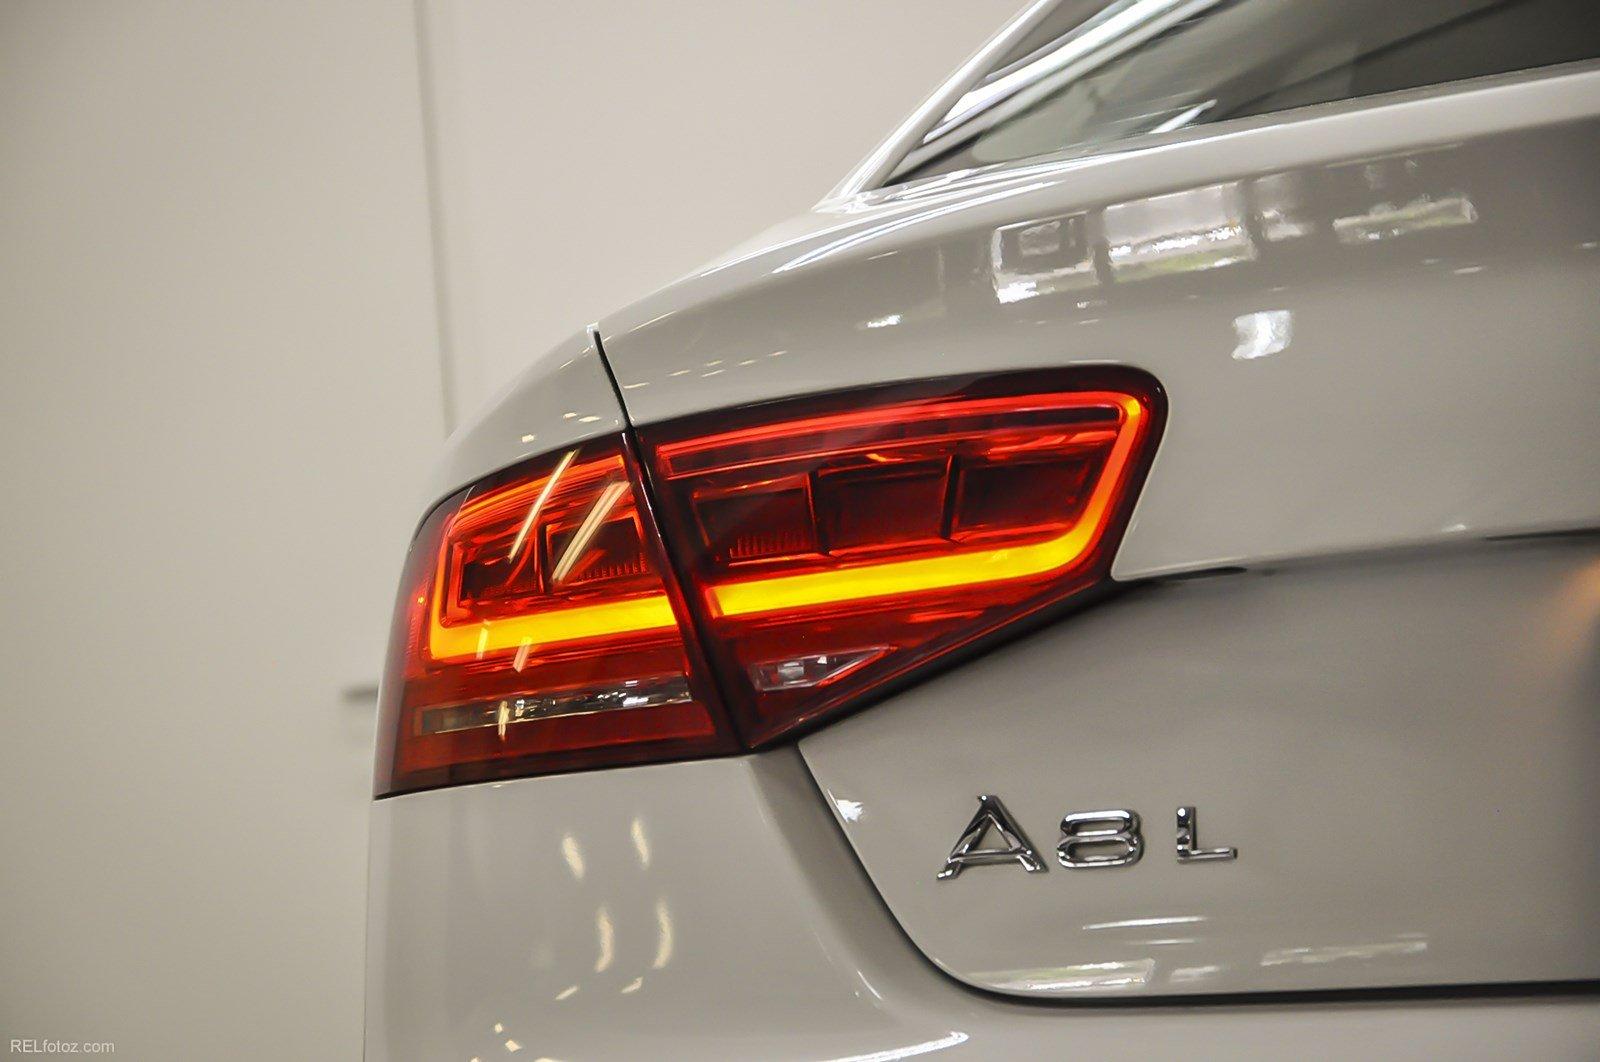 Used 2011 Audi A8 L for sale Sold at Gravity Autos Marietta in Marietta GA 30060 6